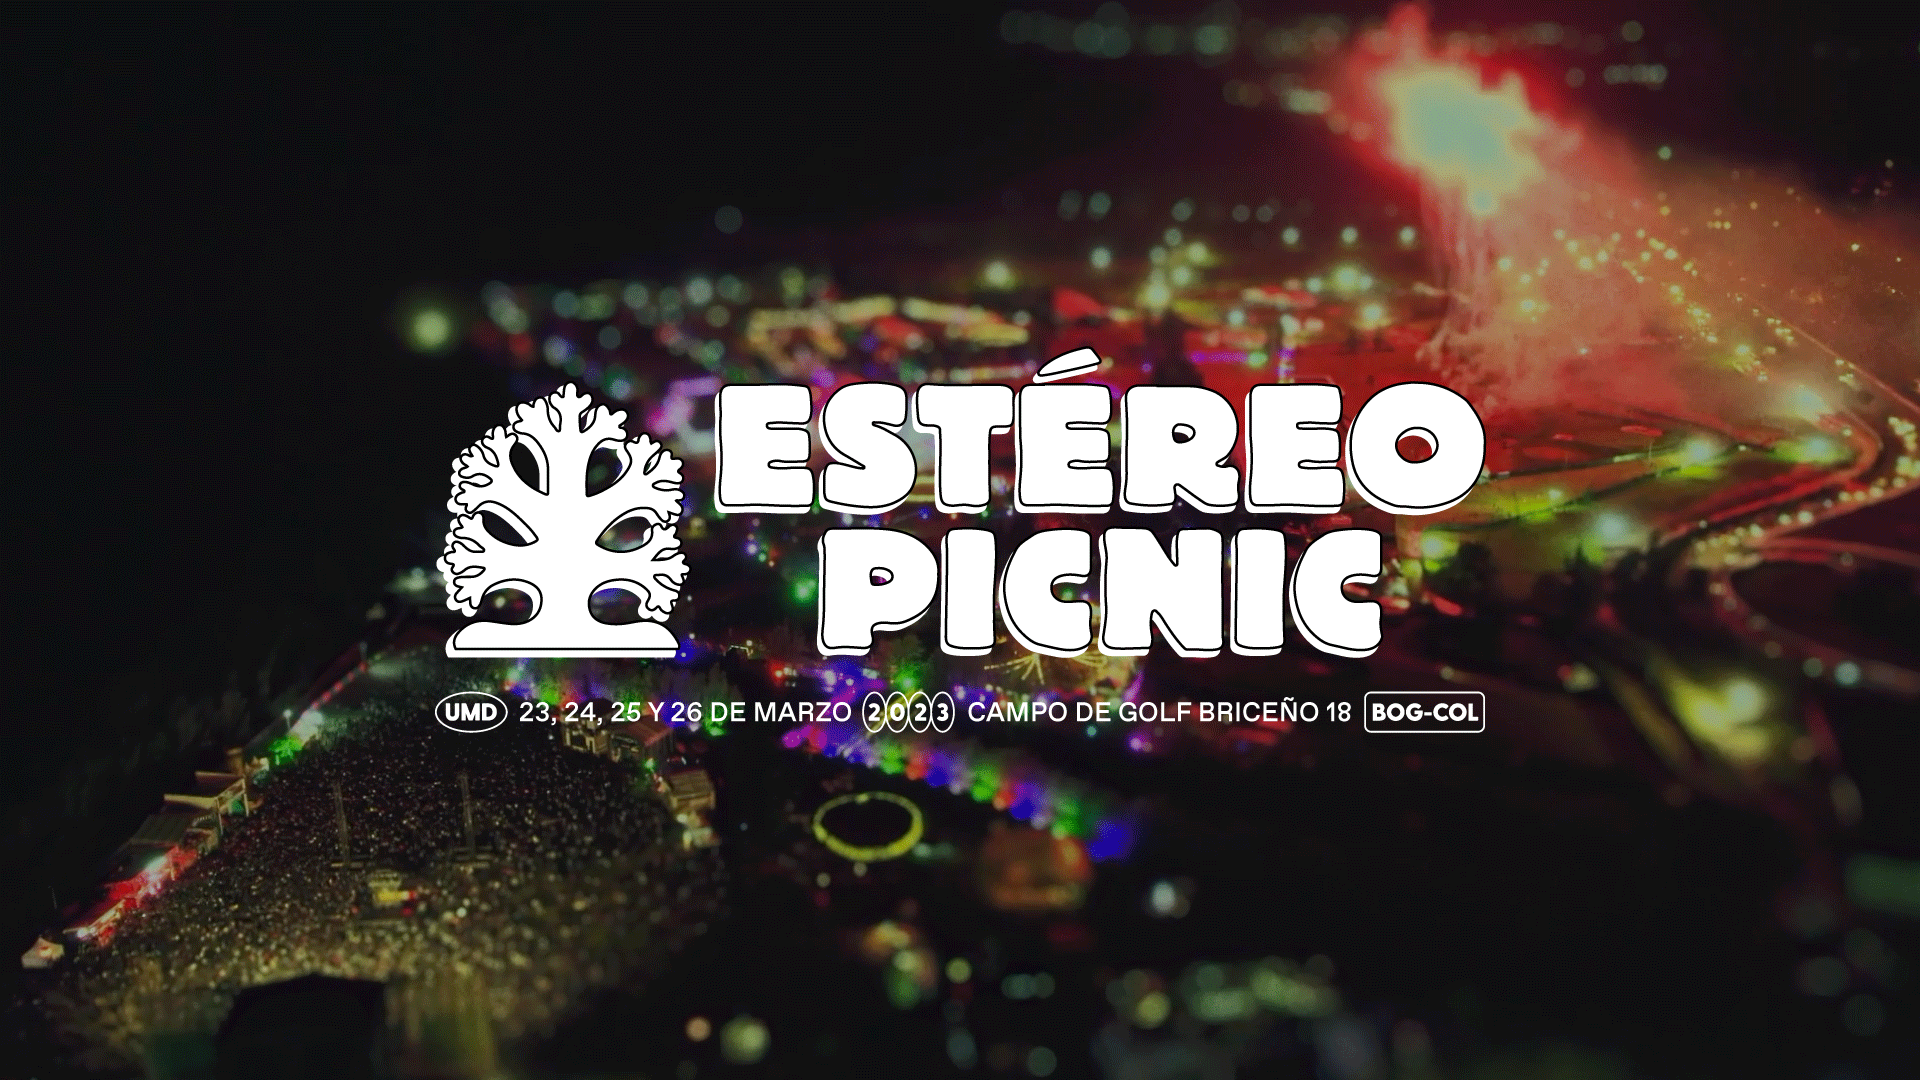 Festival Estéreo Picnic 2023 at Campo de Golf Briceño 18 (Bogotá) on 23 Mar  2023 | Last.fm